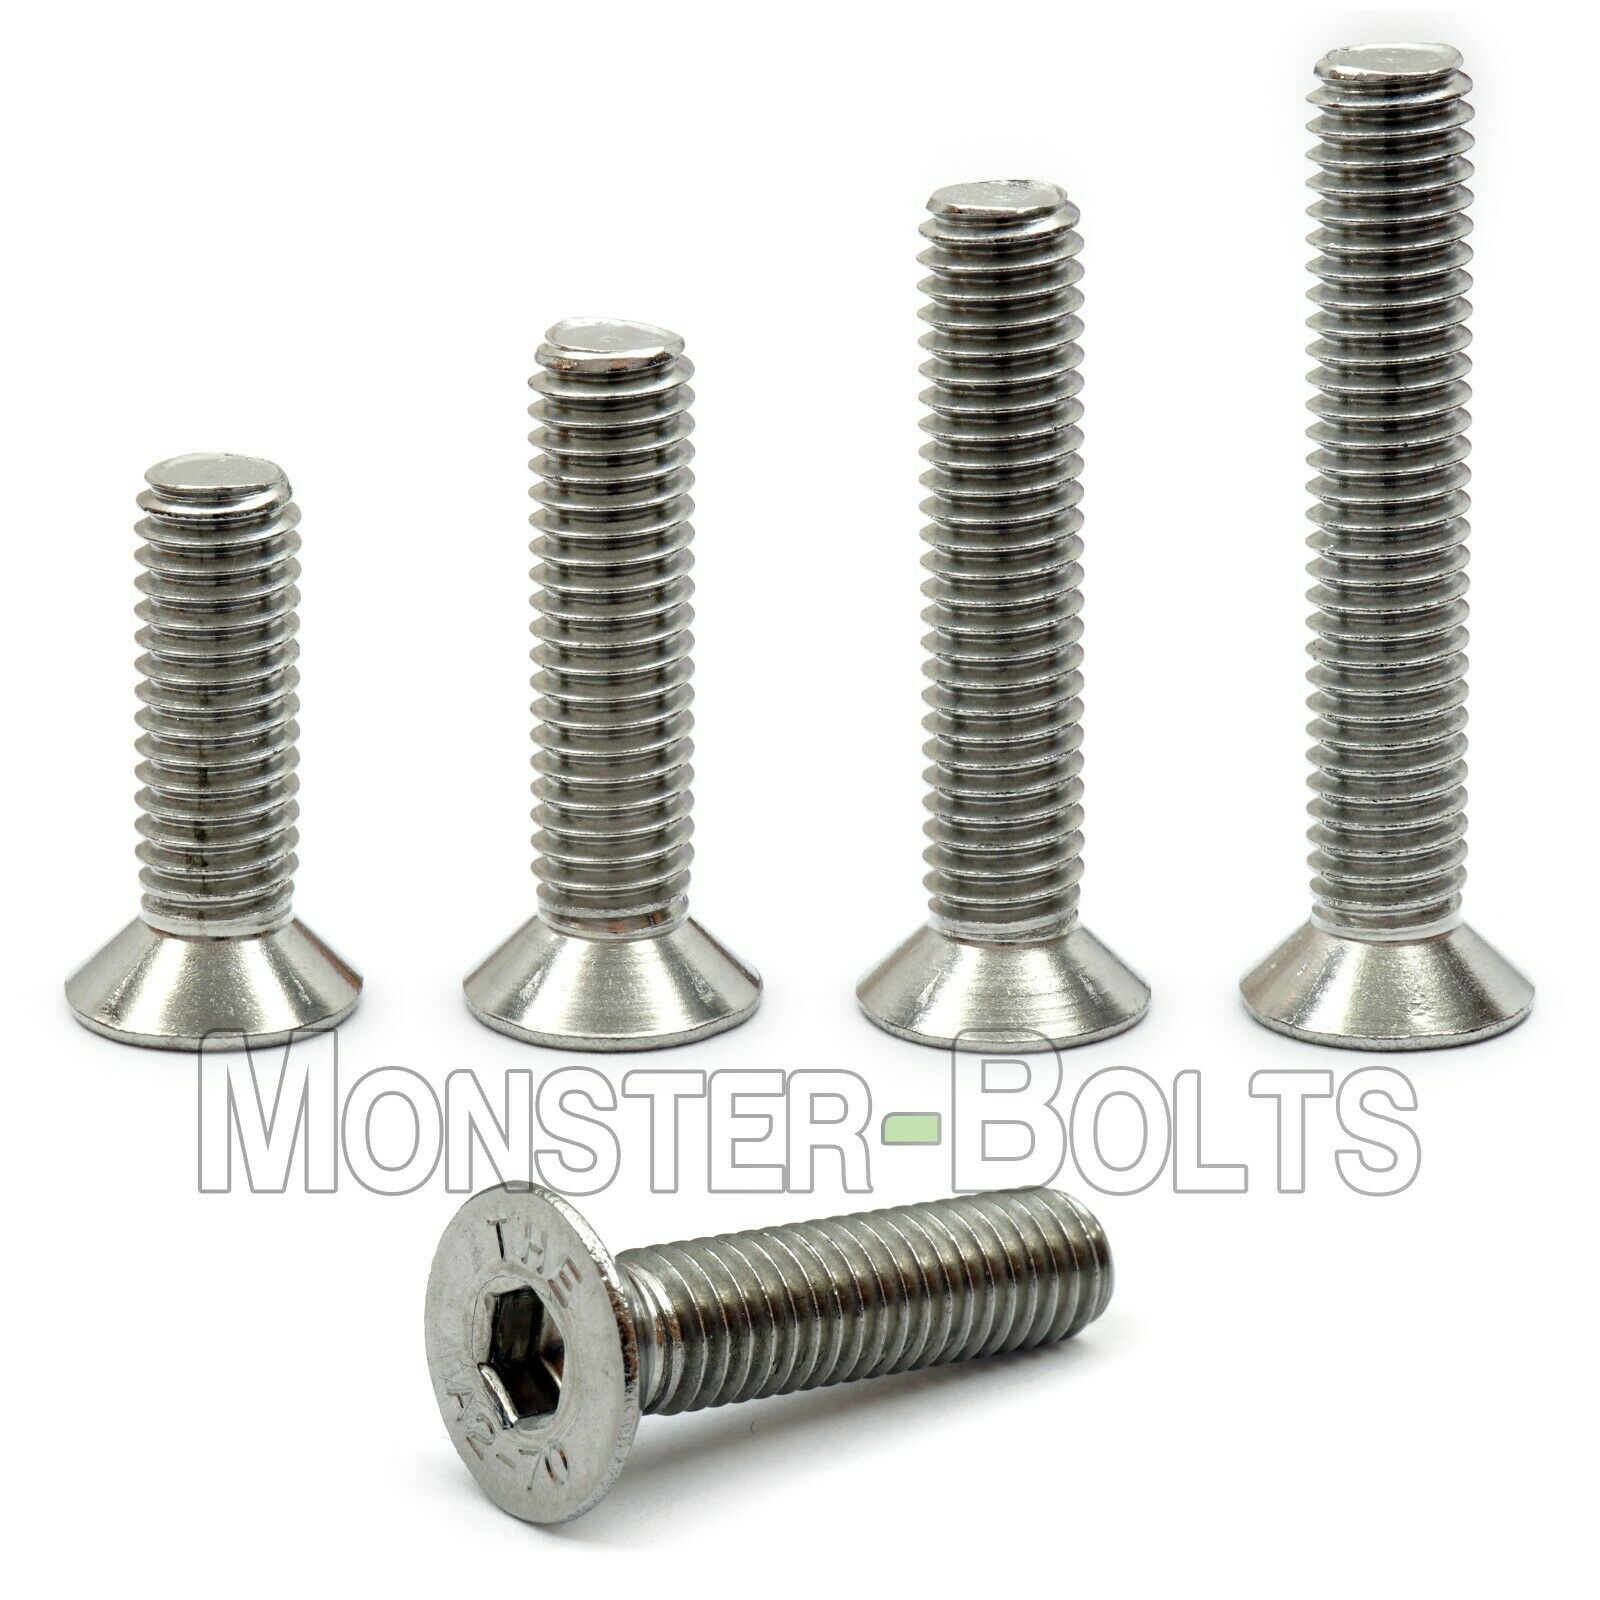 M6 Stainless Steel Flat Head Socket Cap Screws A2, Metric Din 7991 1.0 Coarse